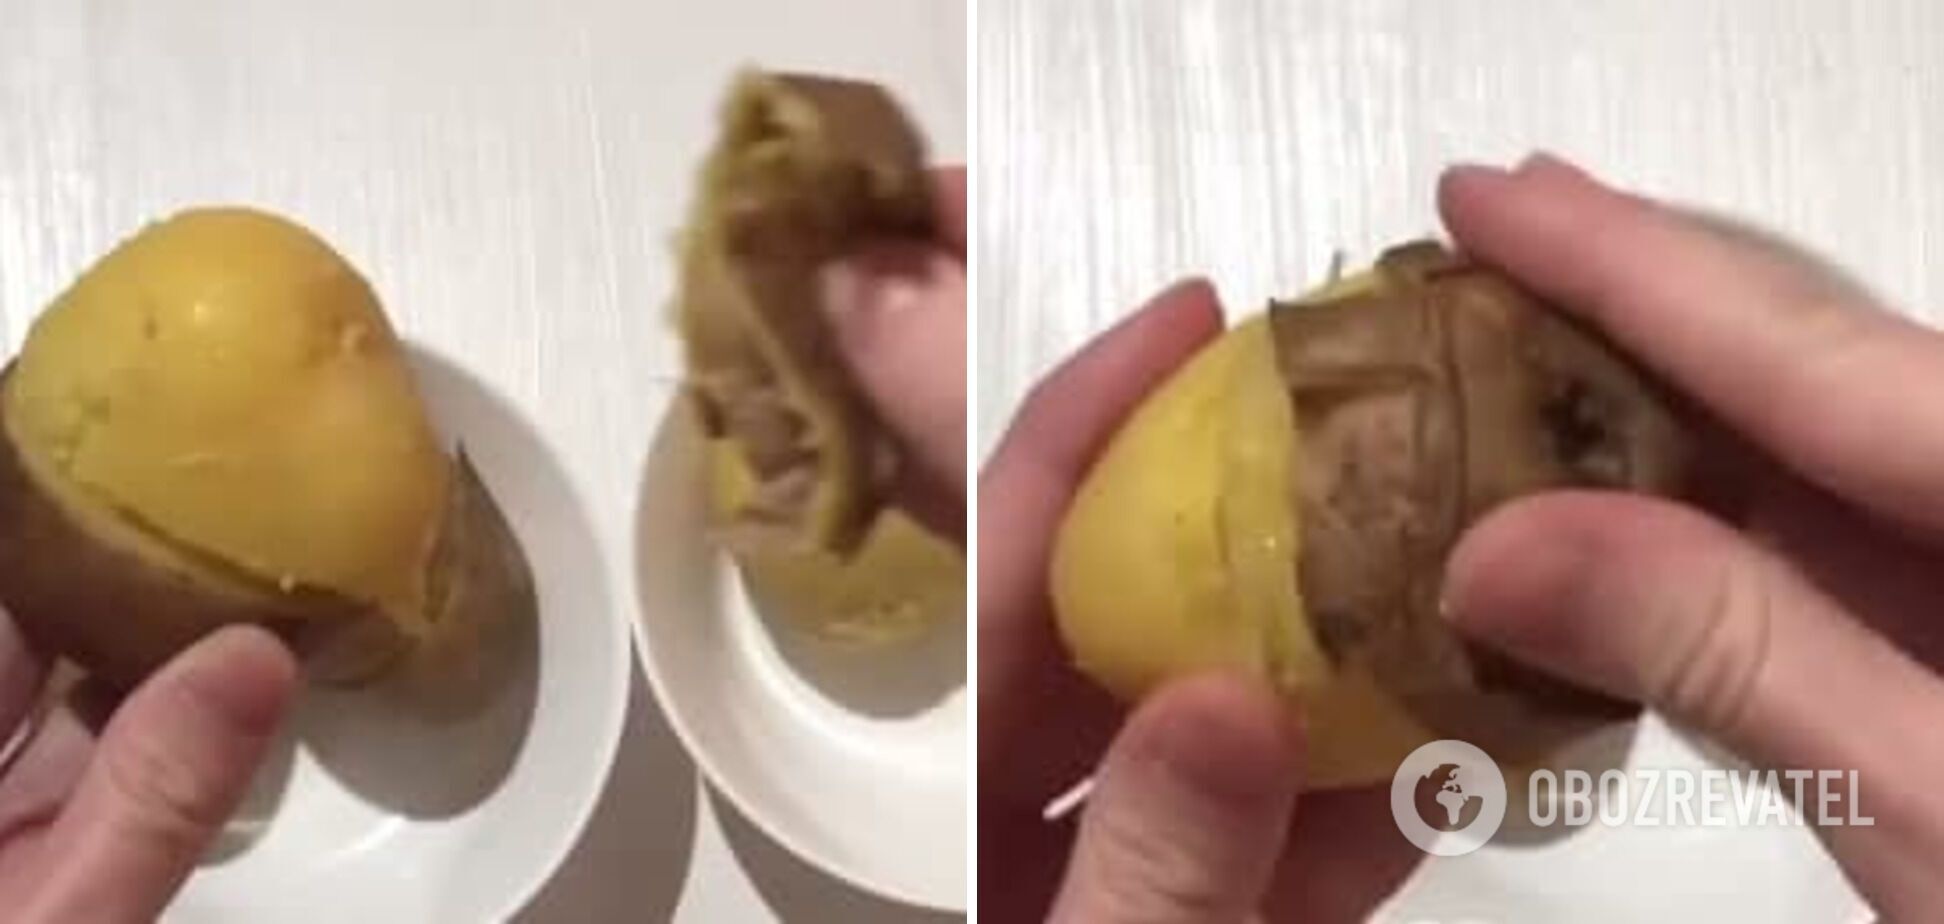 How to peel a potato